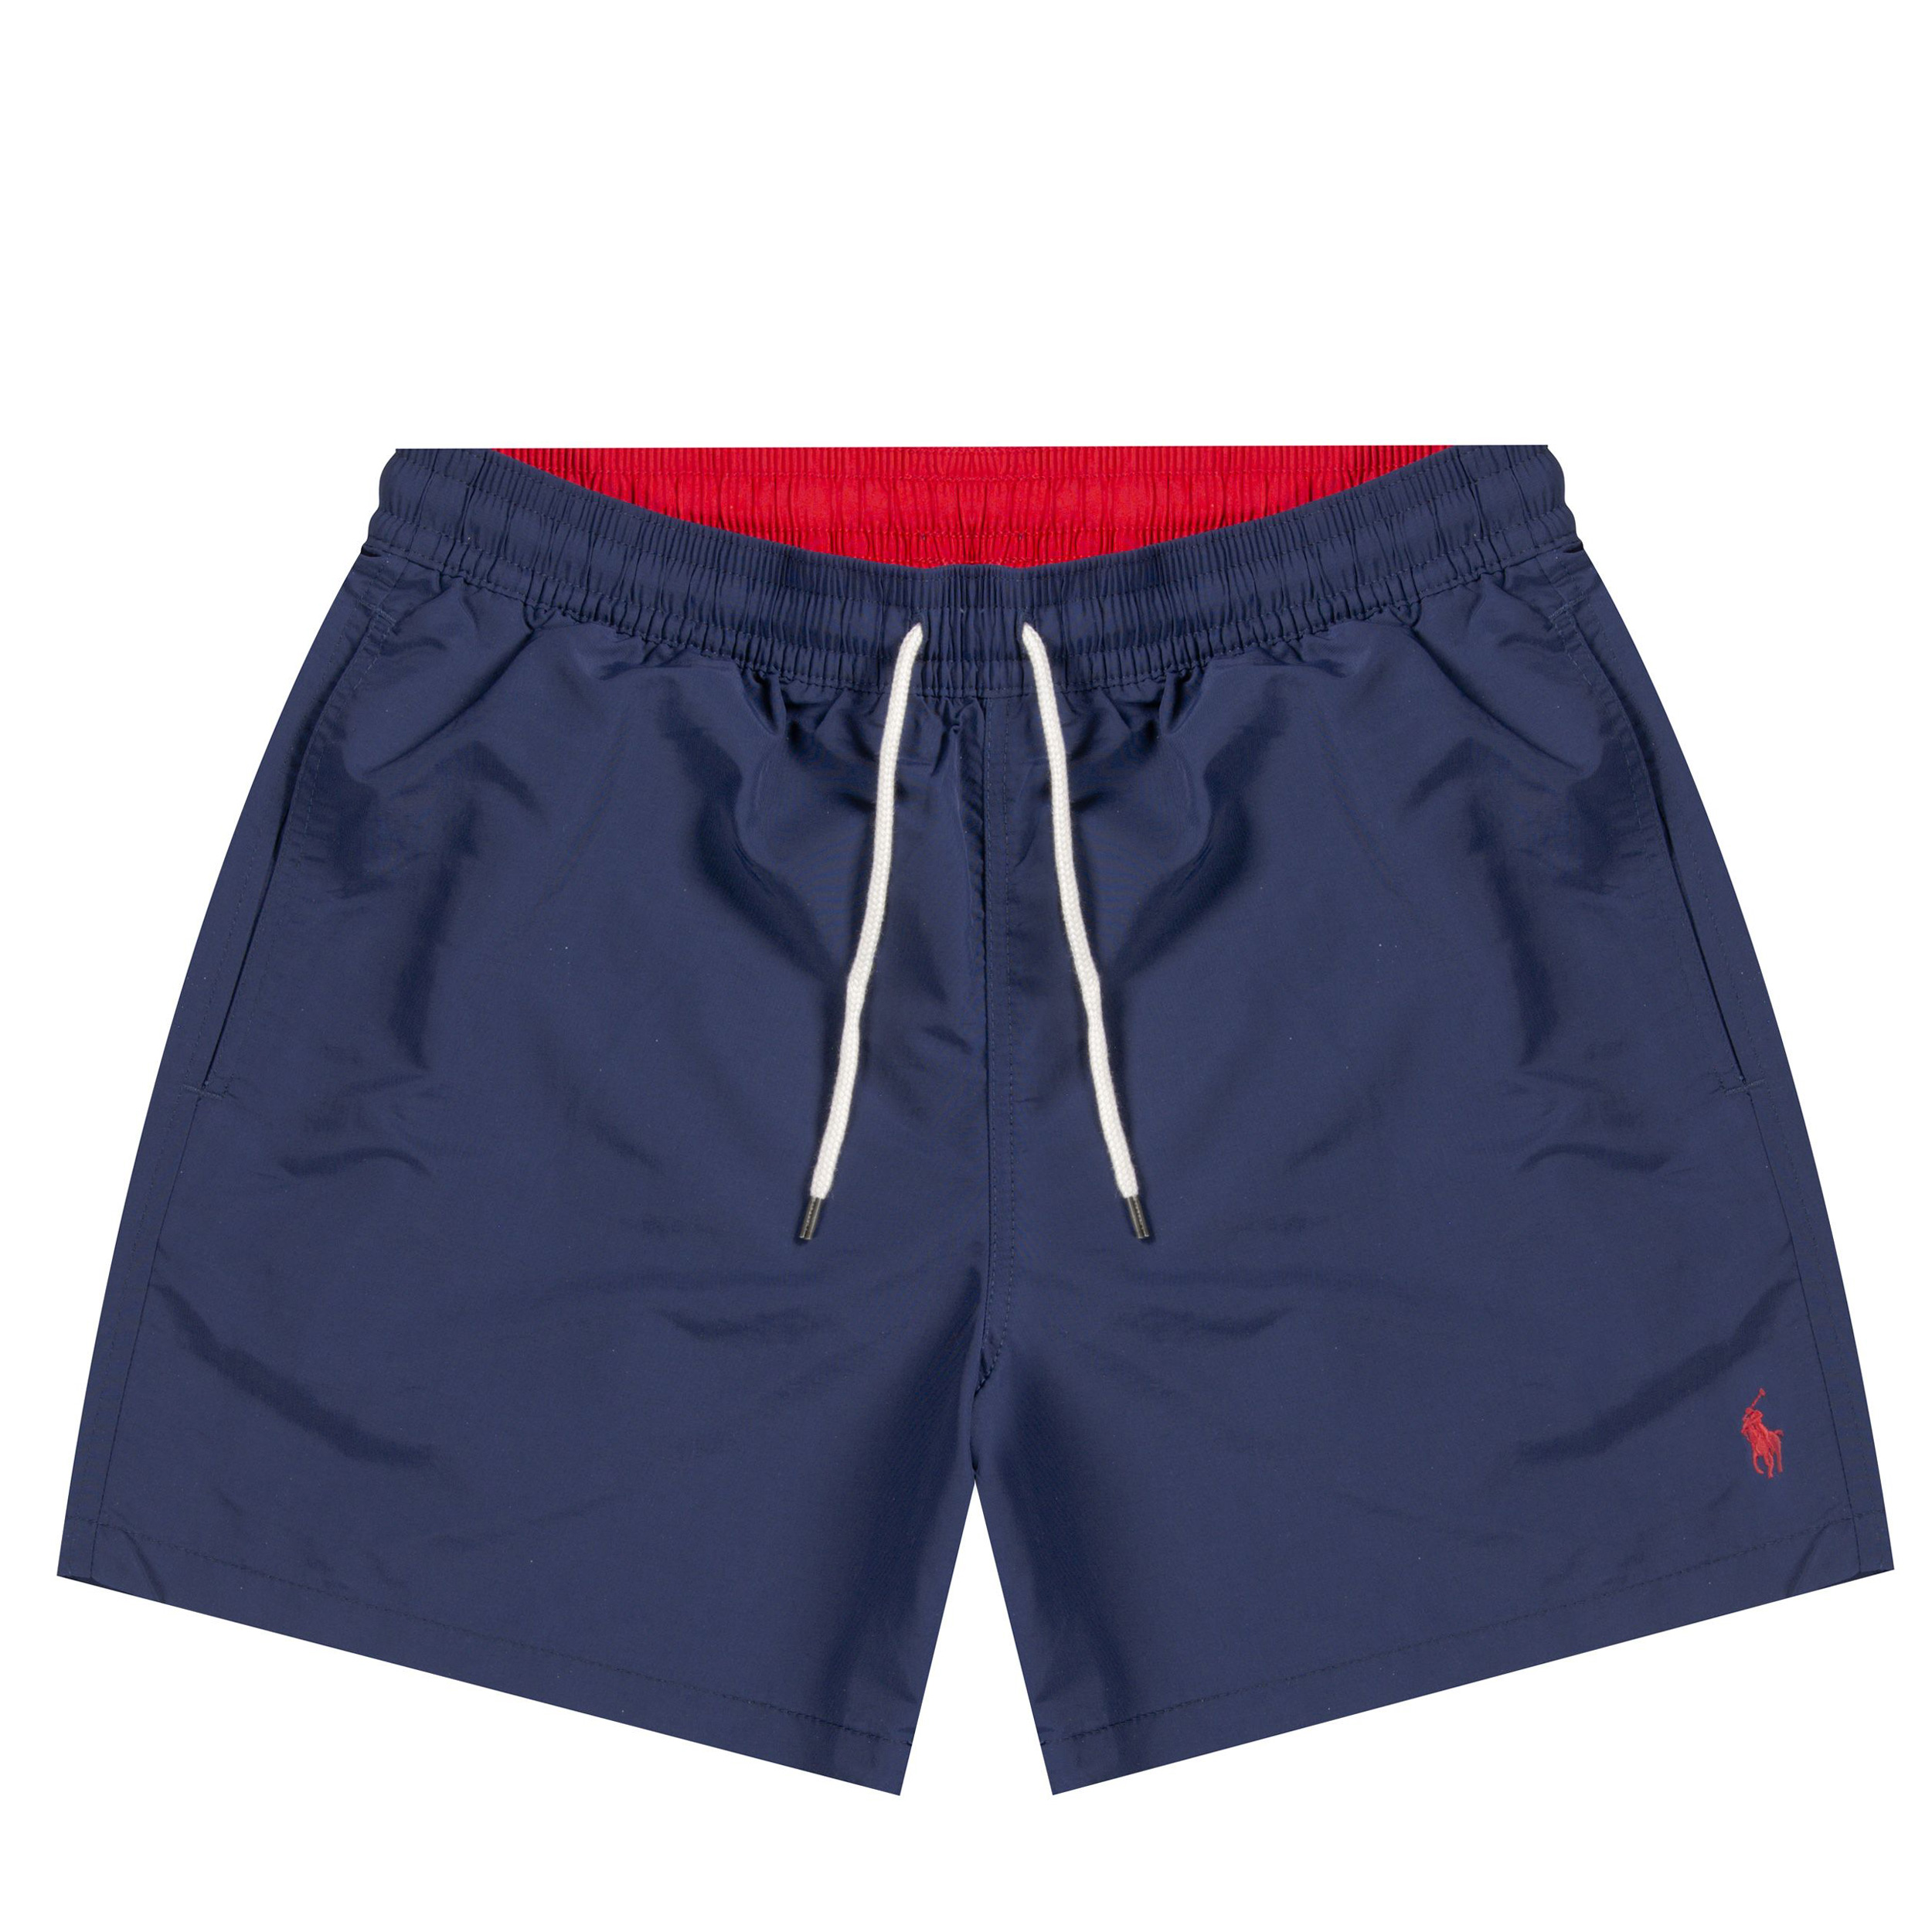 Polo Ralph Lauren ’Classic’ Swim Shorts Navy/Red